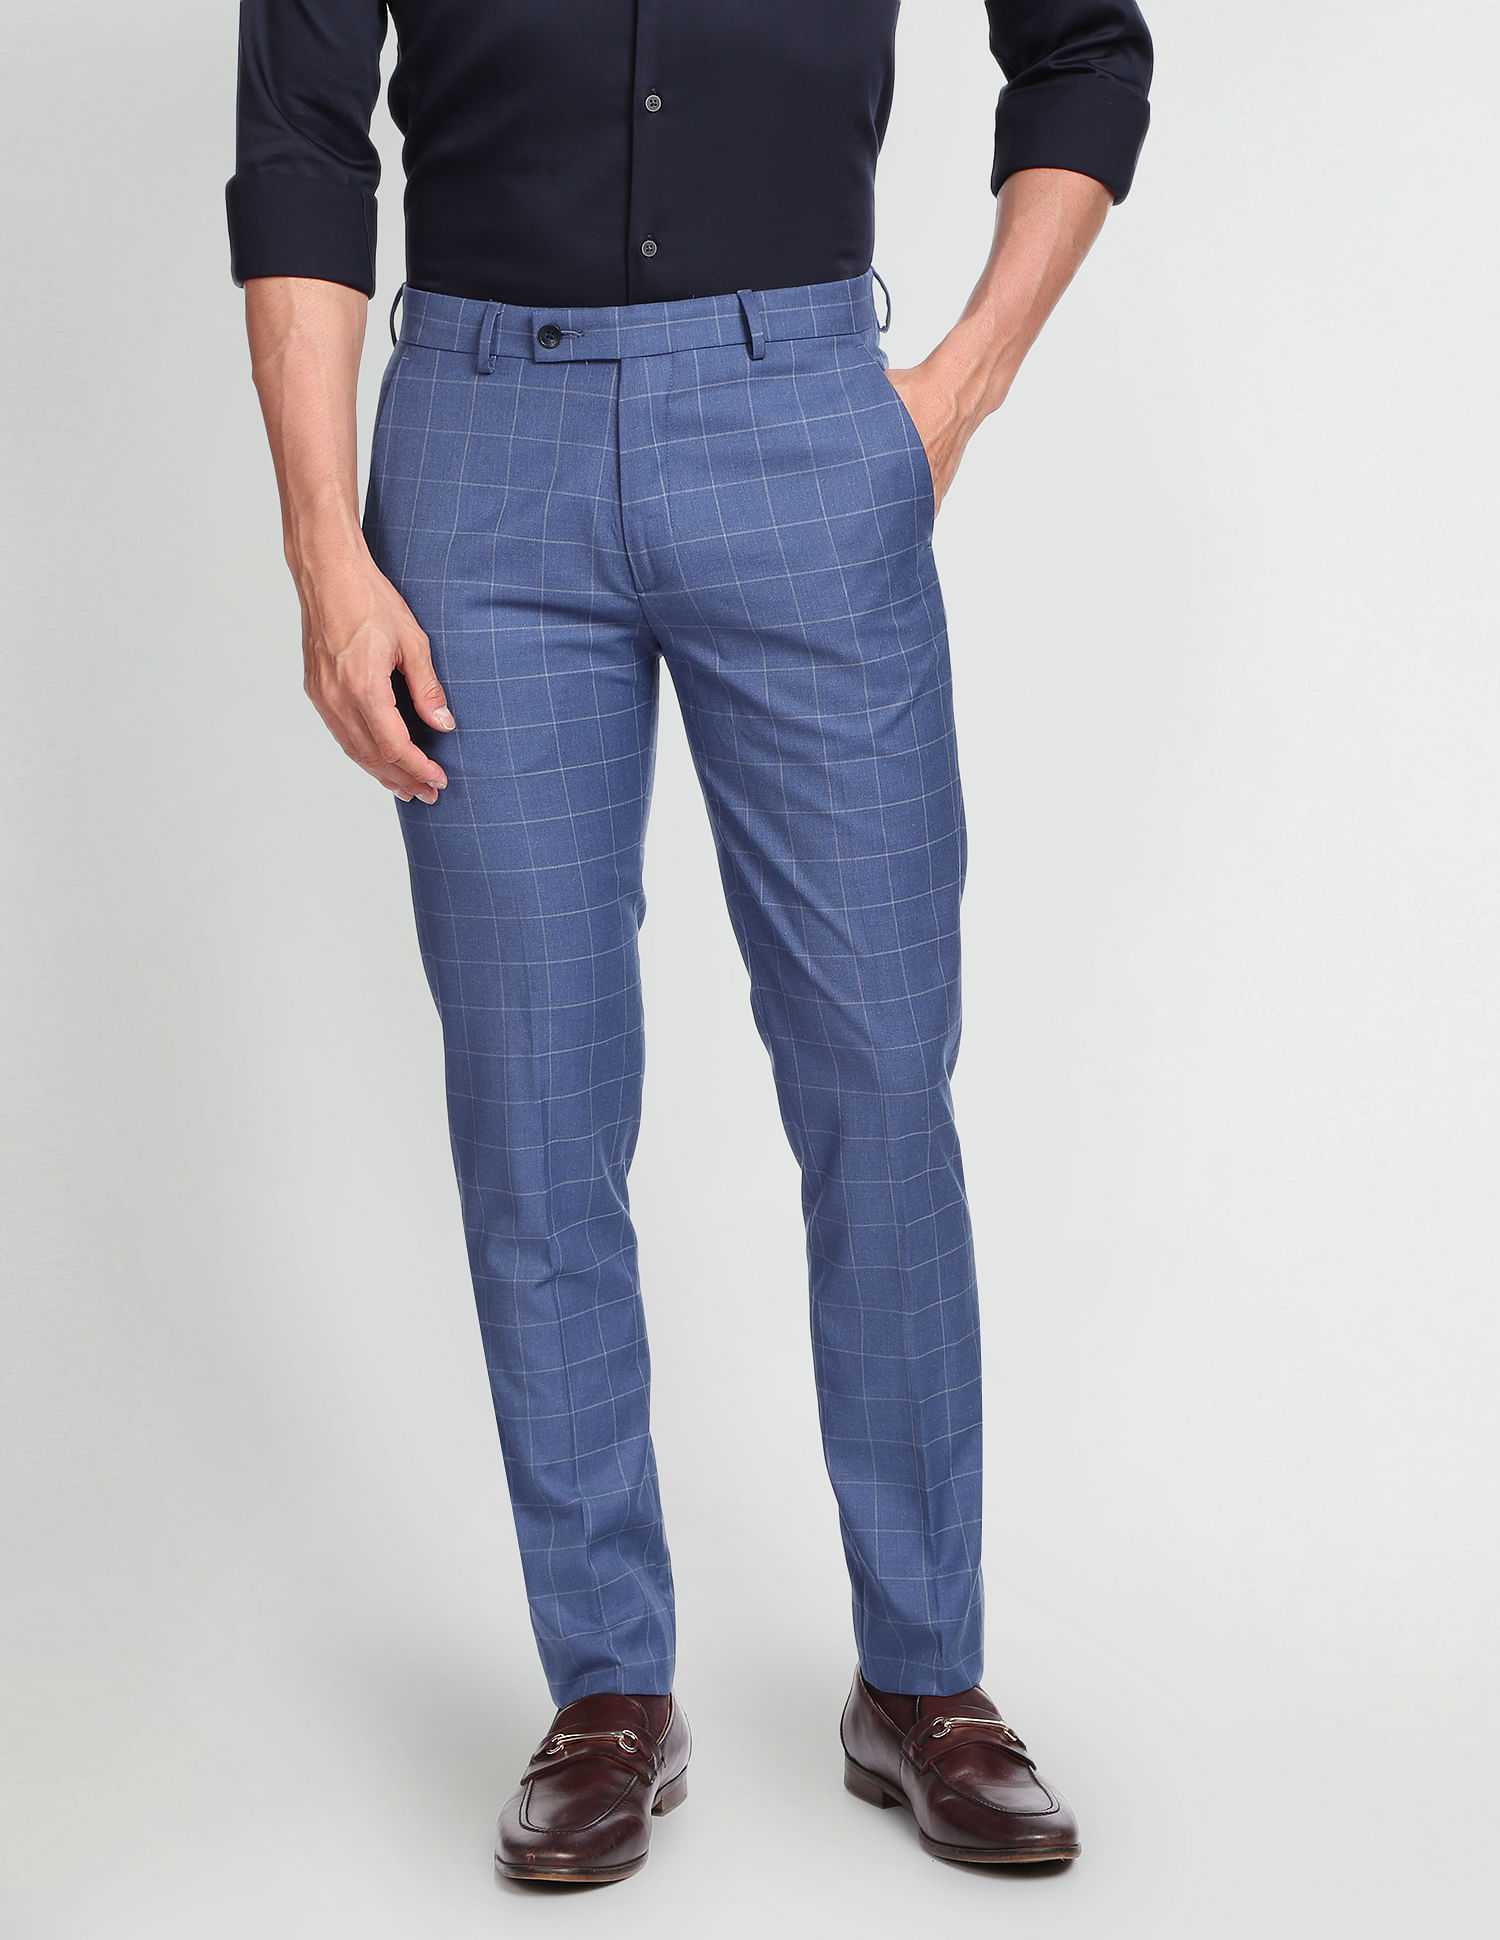 Buy Men Black Check Slim Fit Formal Trousers Online - 790363 | Peter England